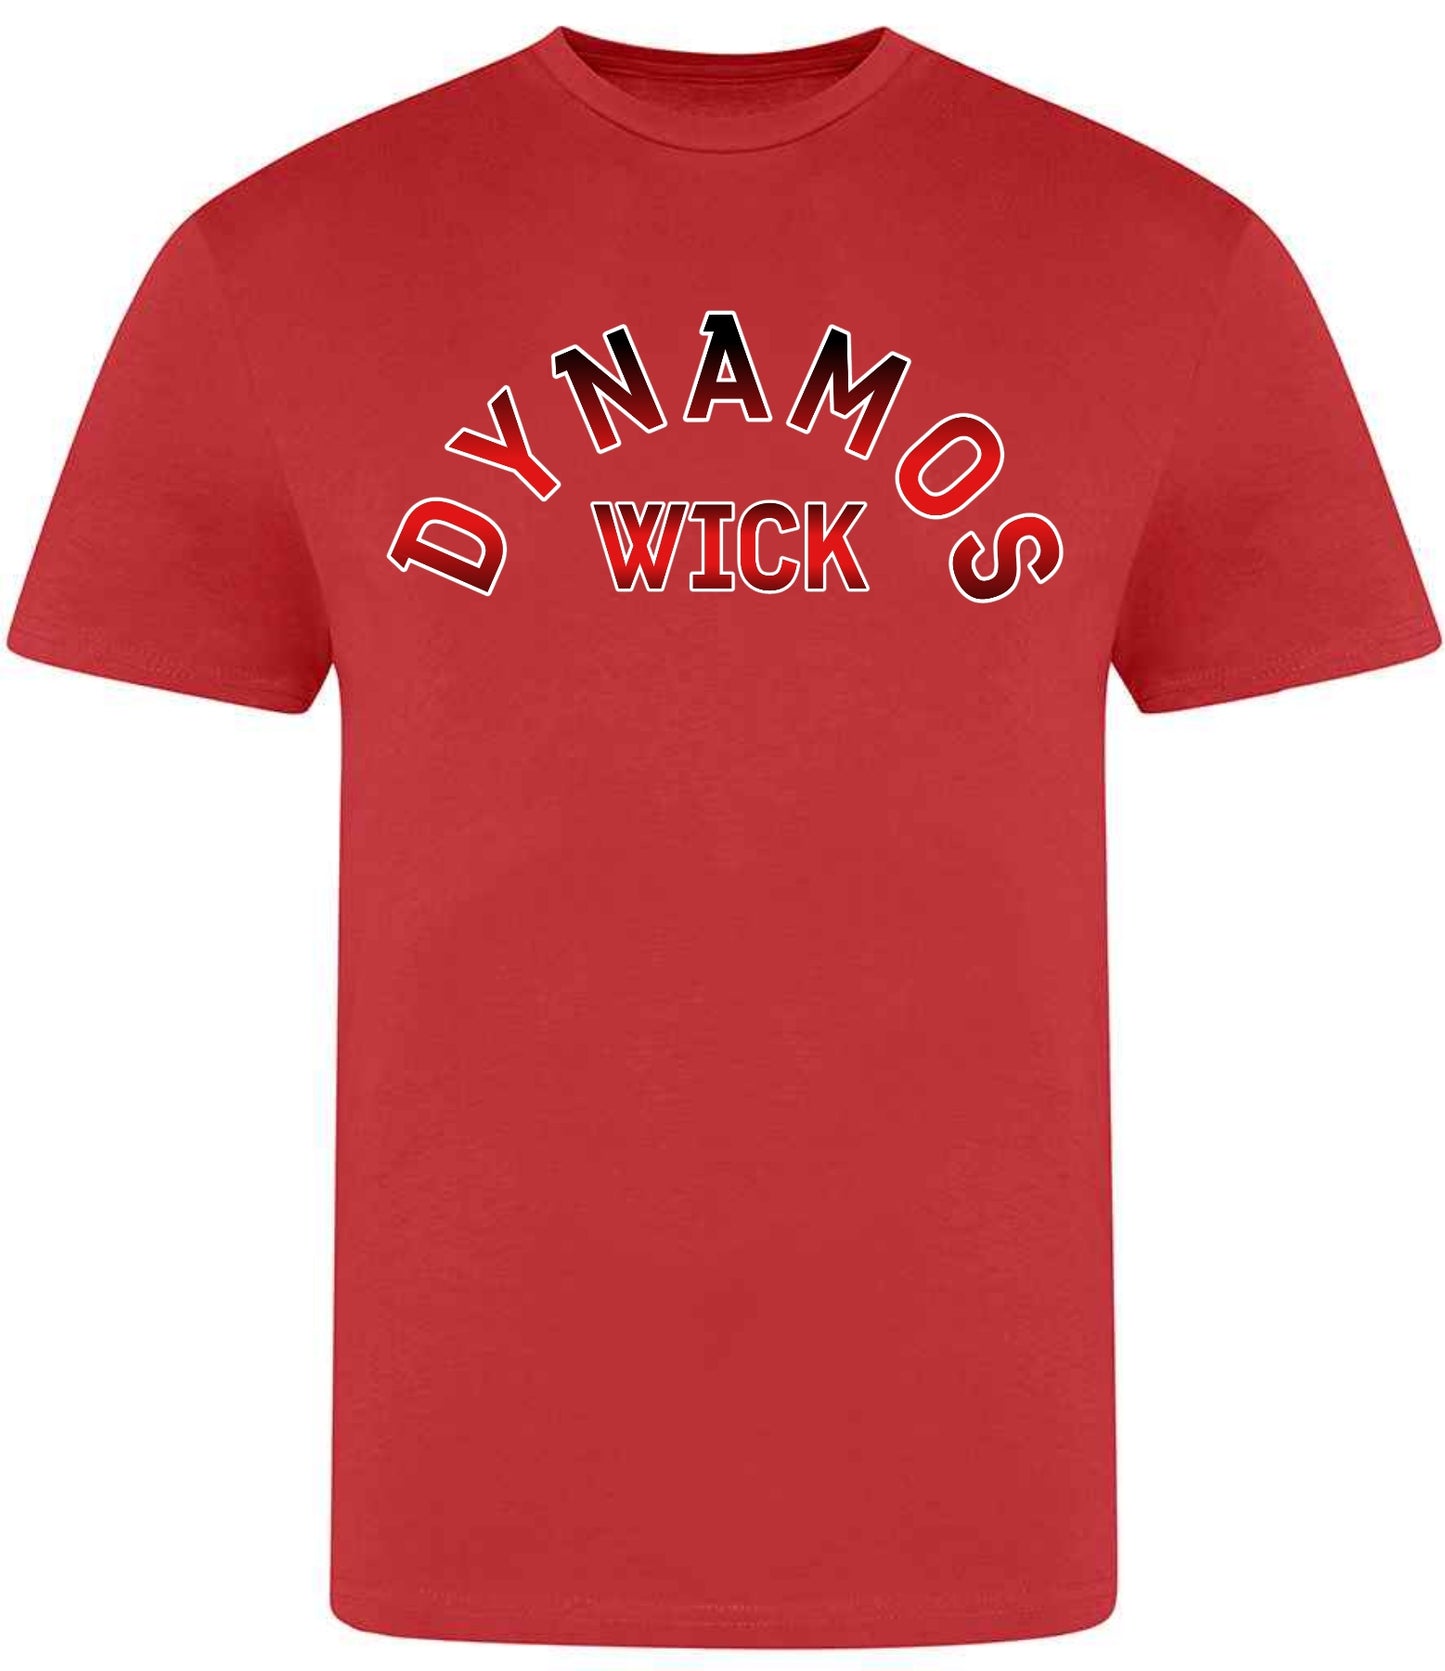 Wick Dynamos Adult T Shirt - Various designs